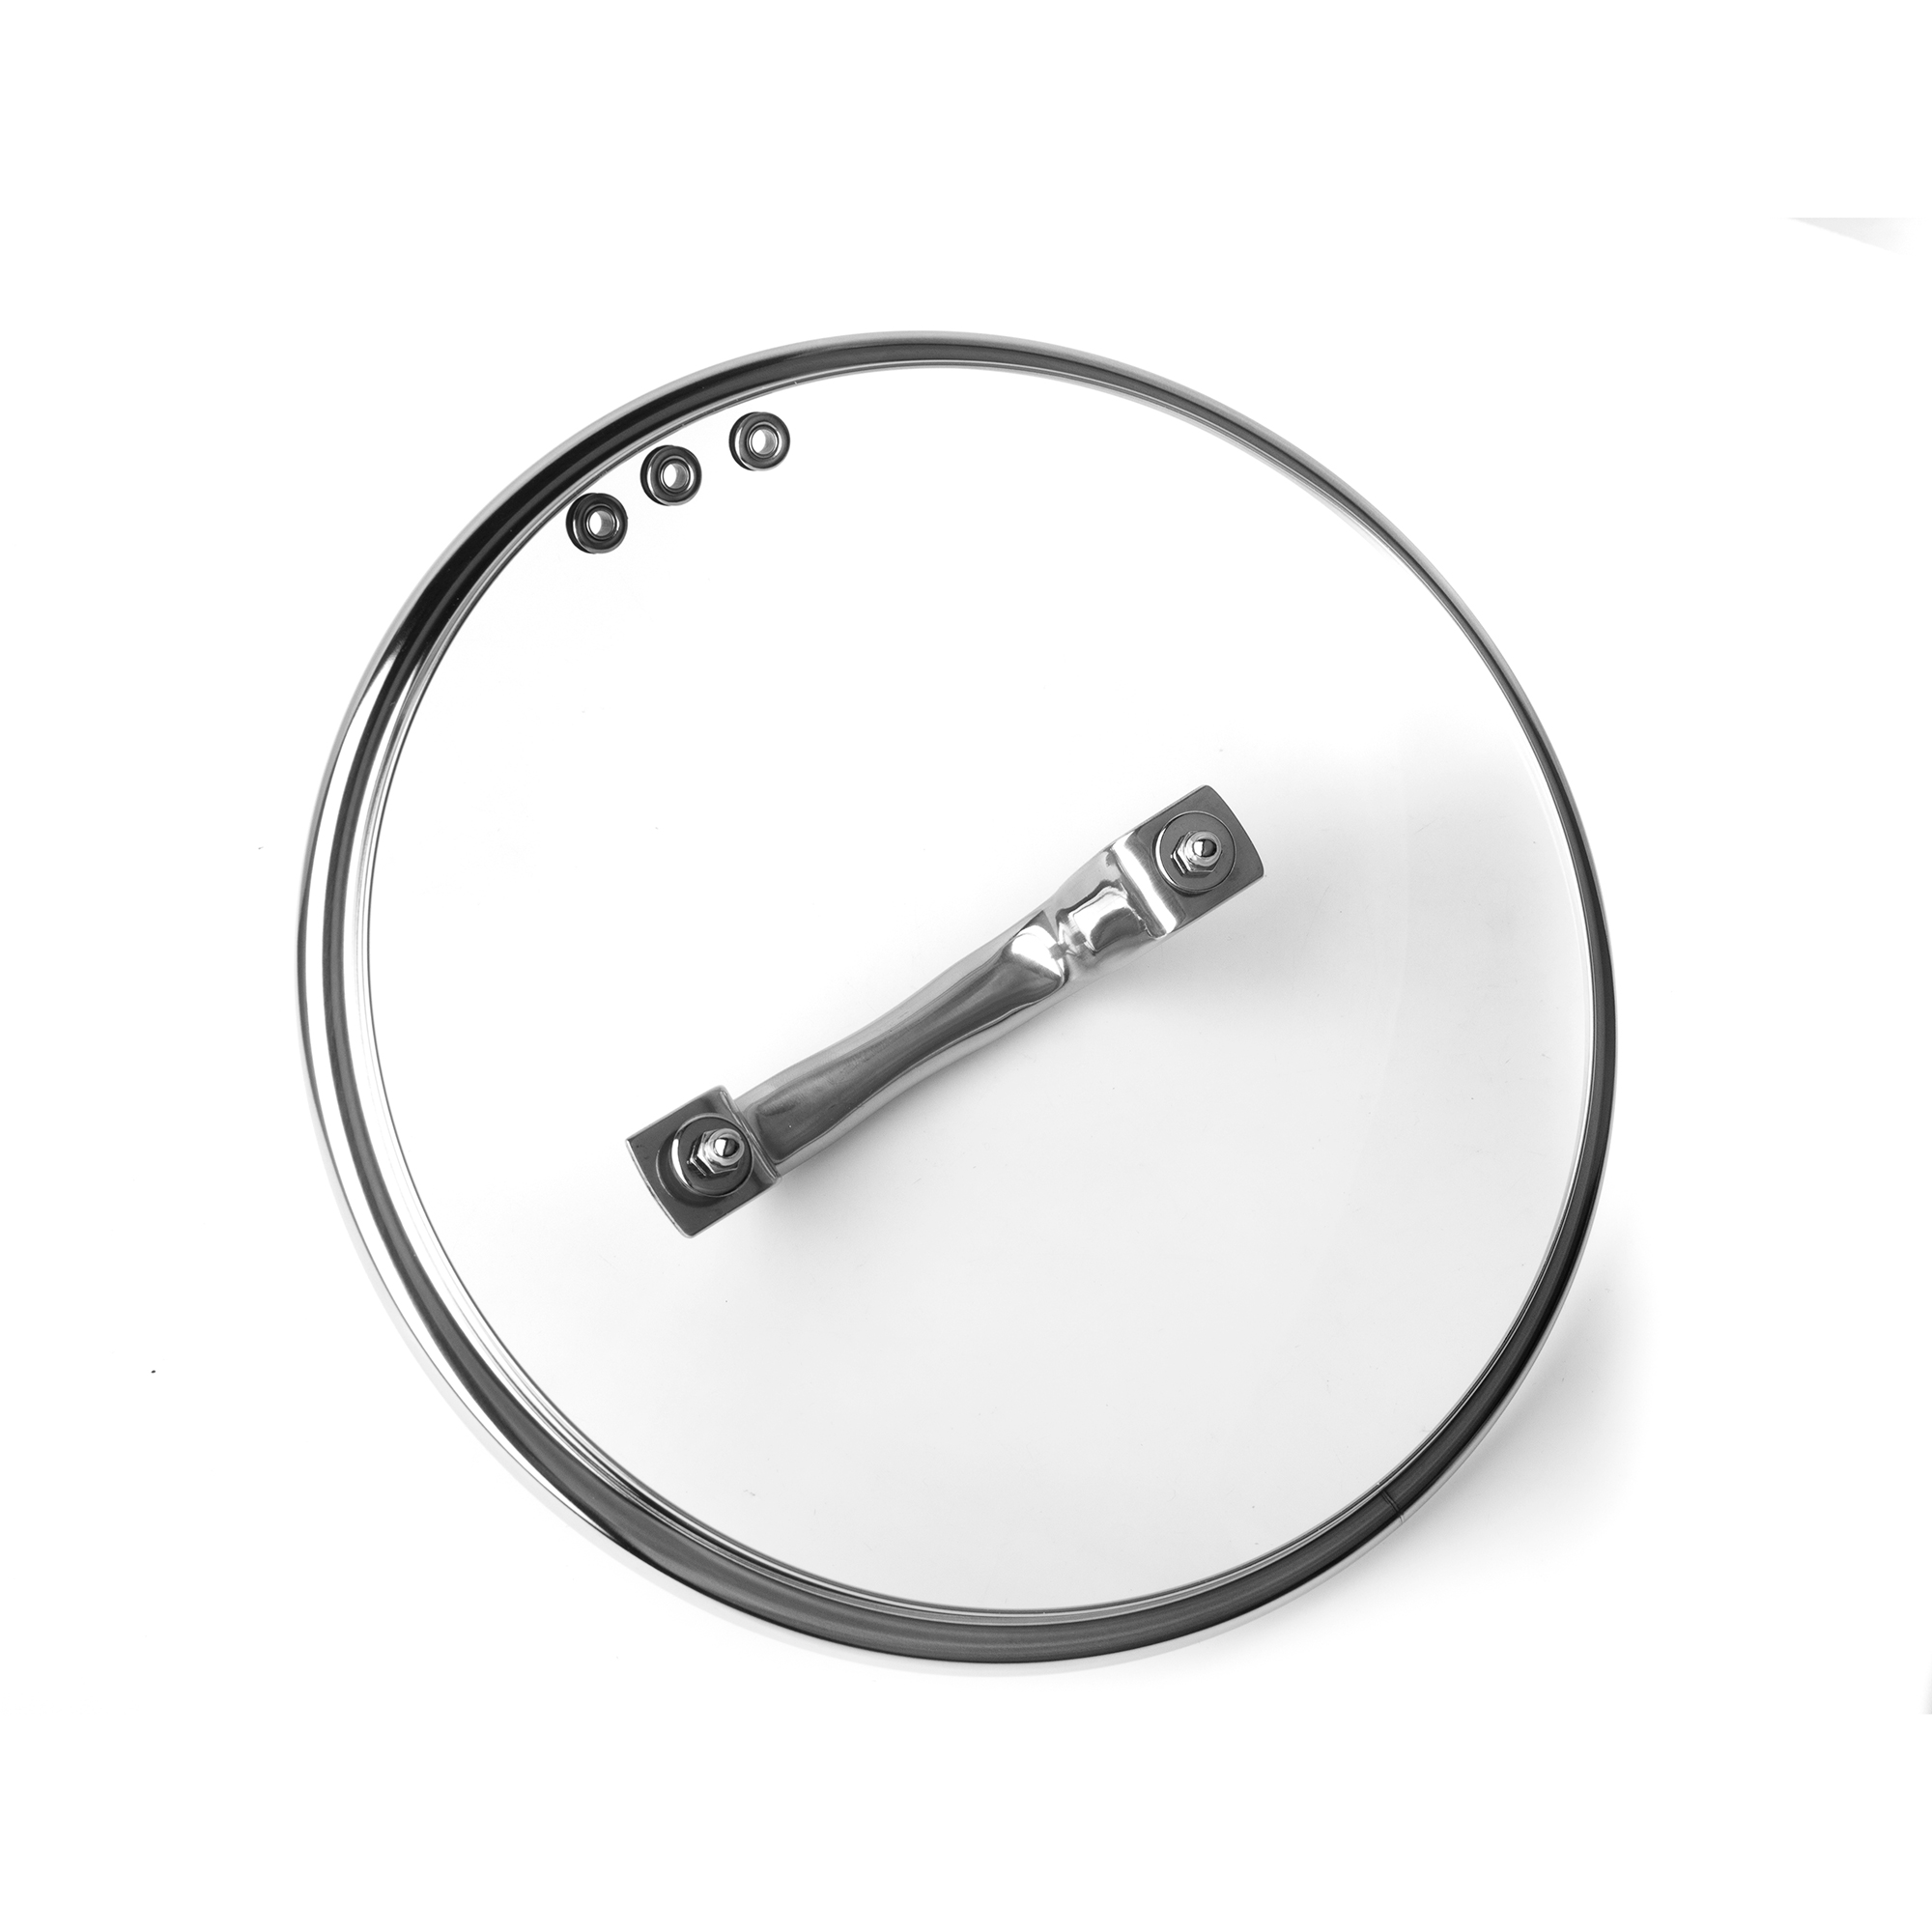 Кастрюля с крышкой Roesle Charm диаметр 16 см 1,9 л, цвет серебристый - фото 5